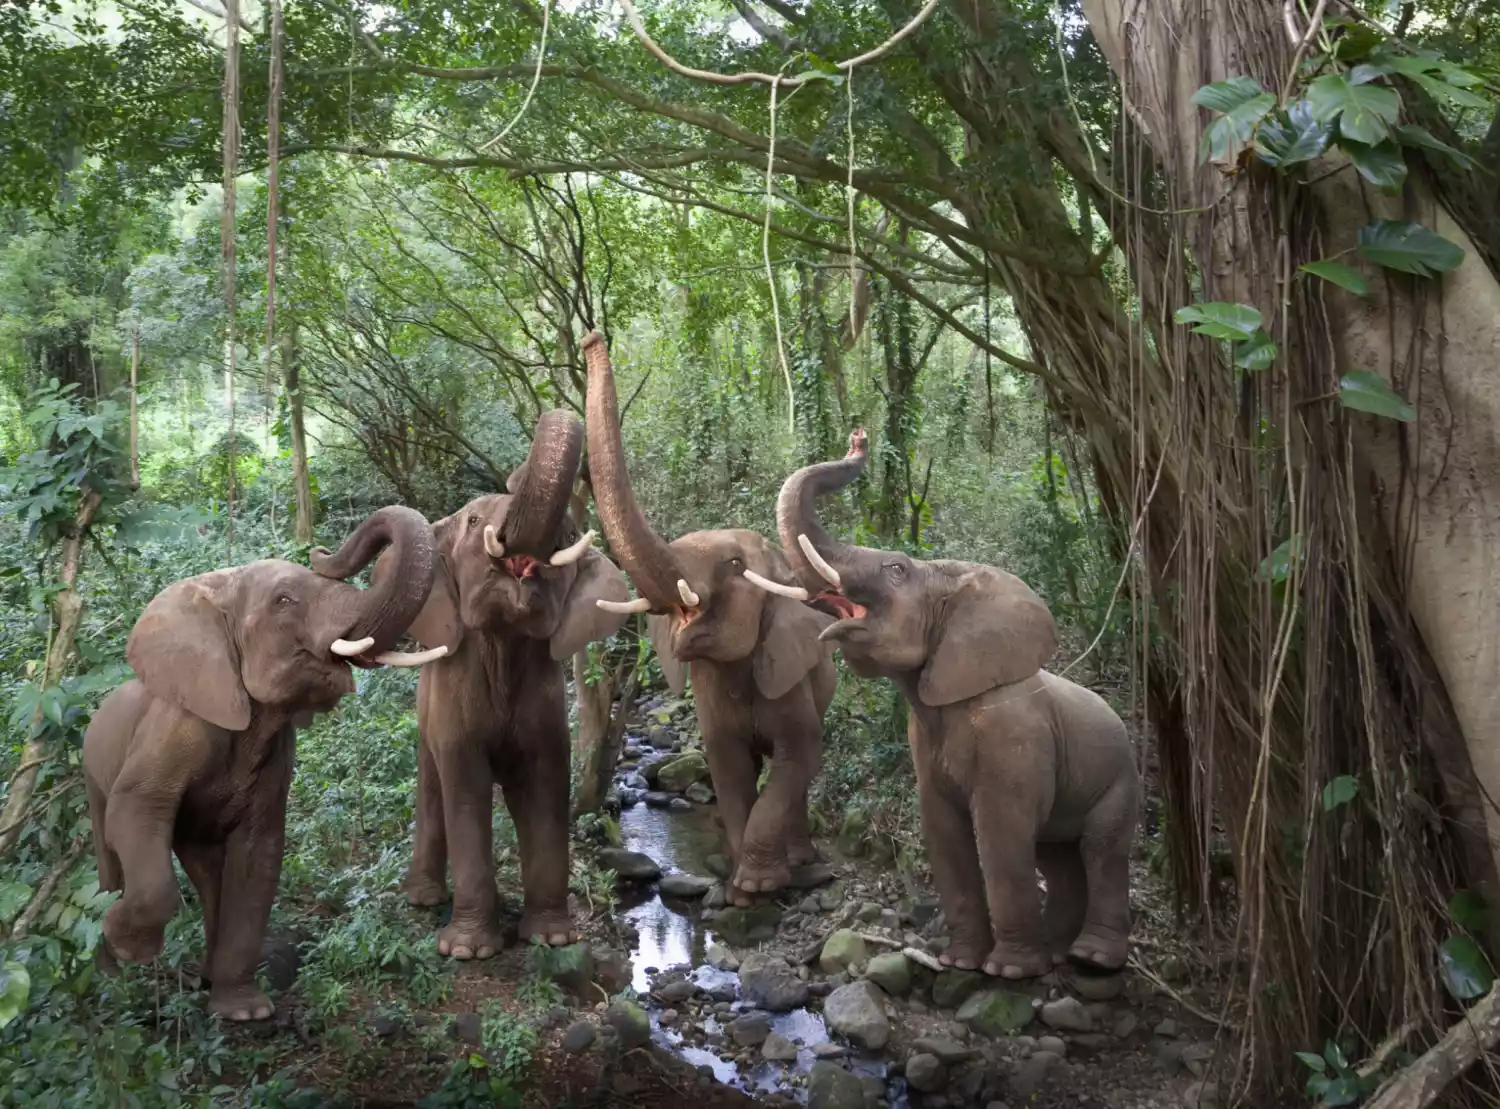 Elephants in a rainforest